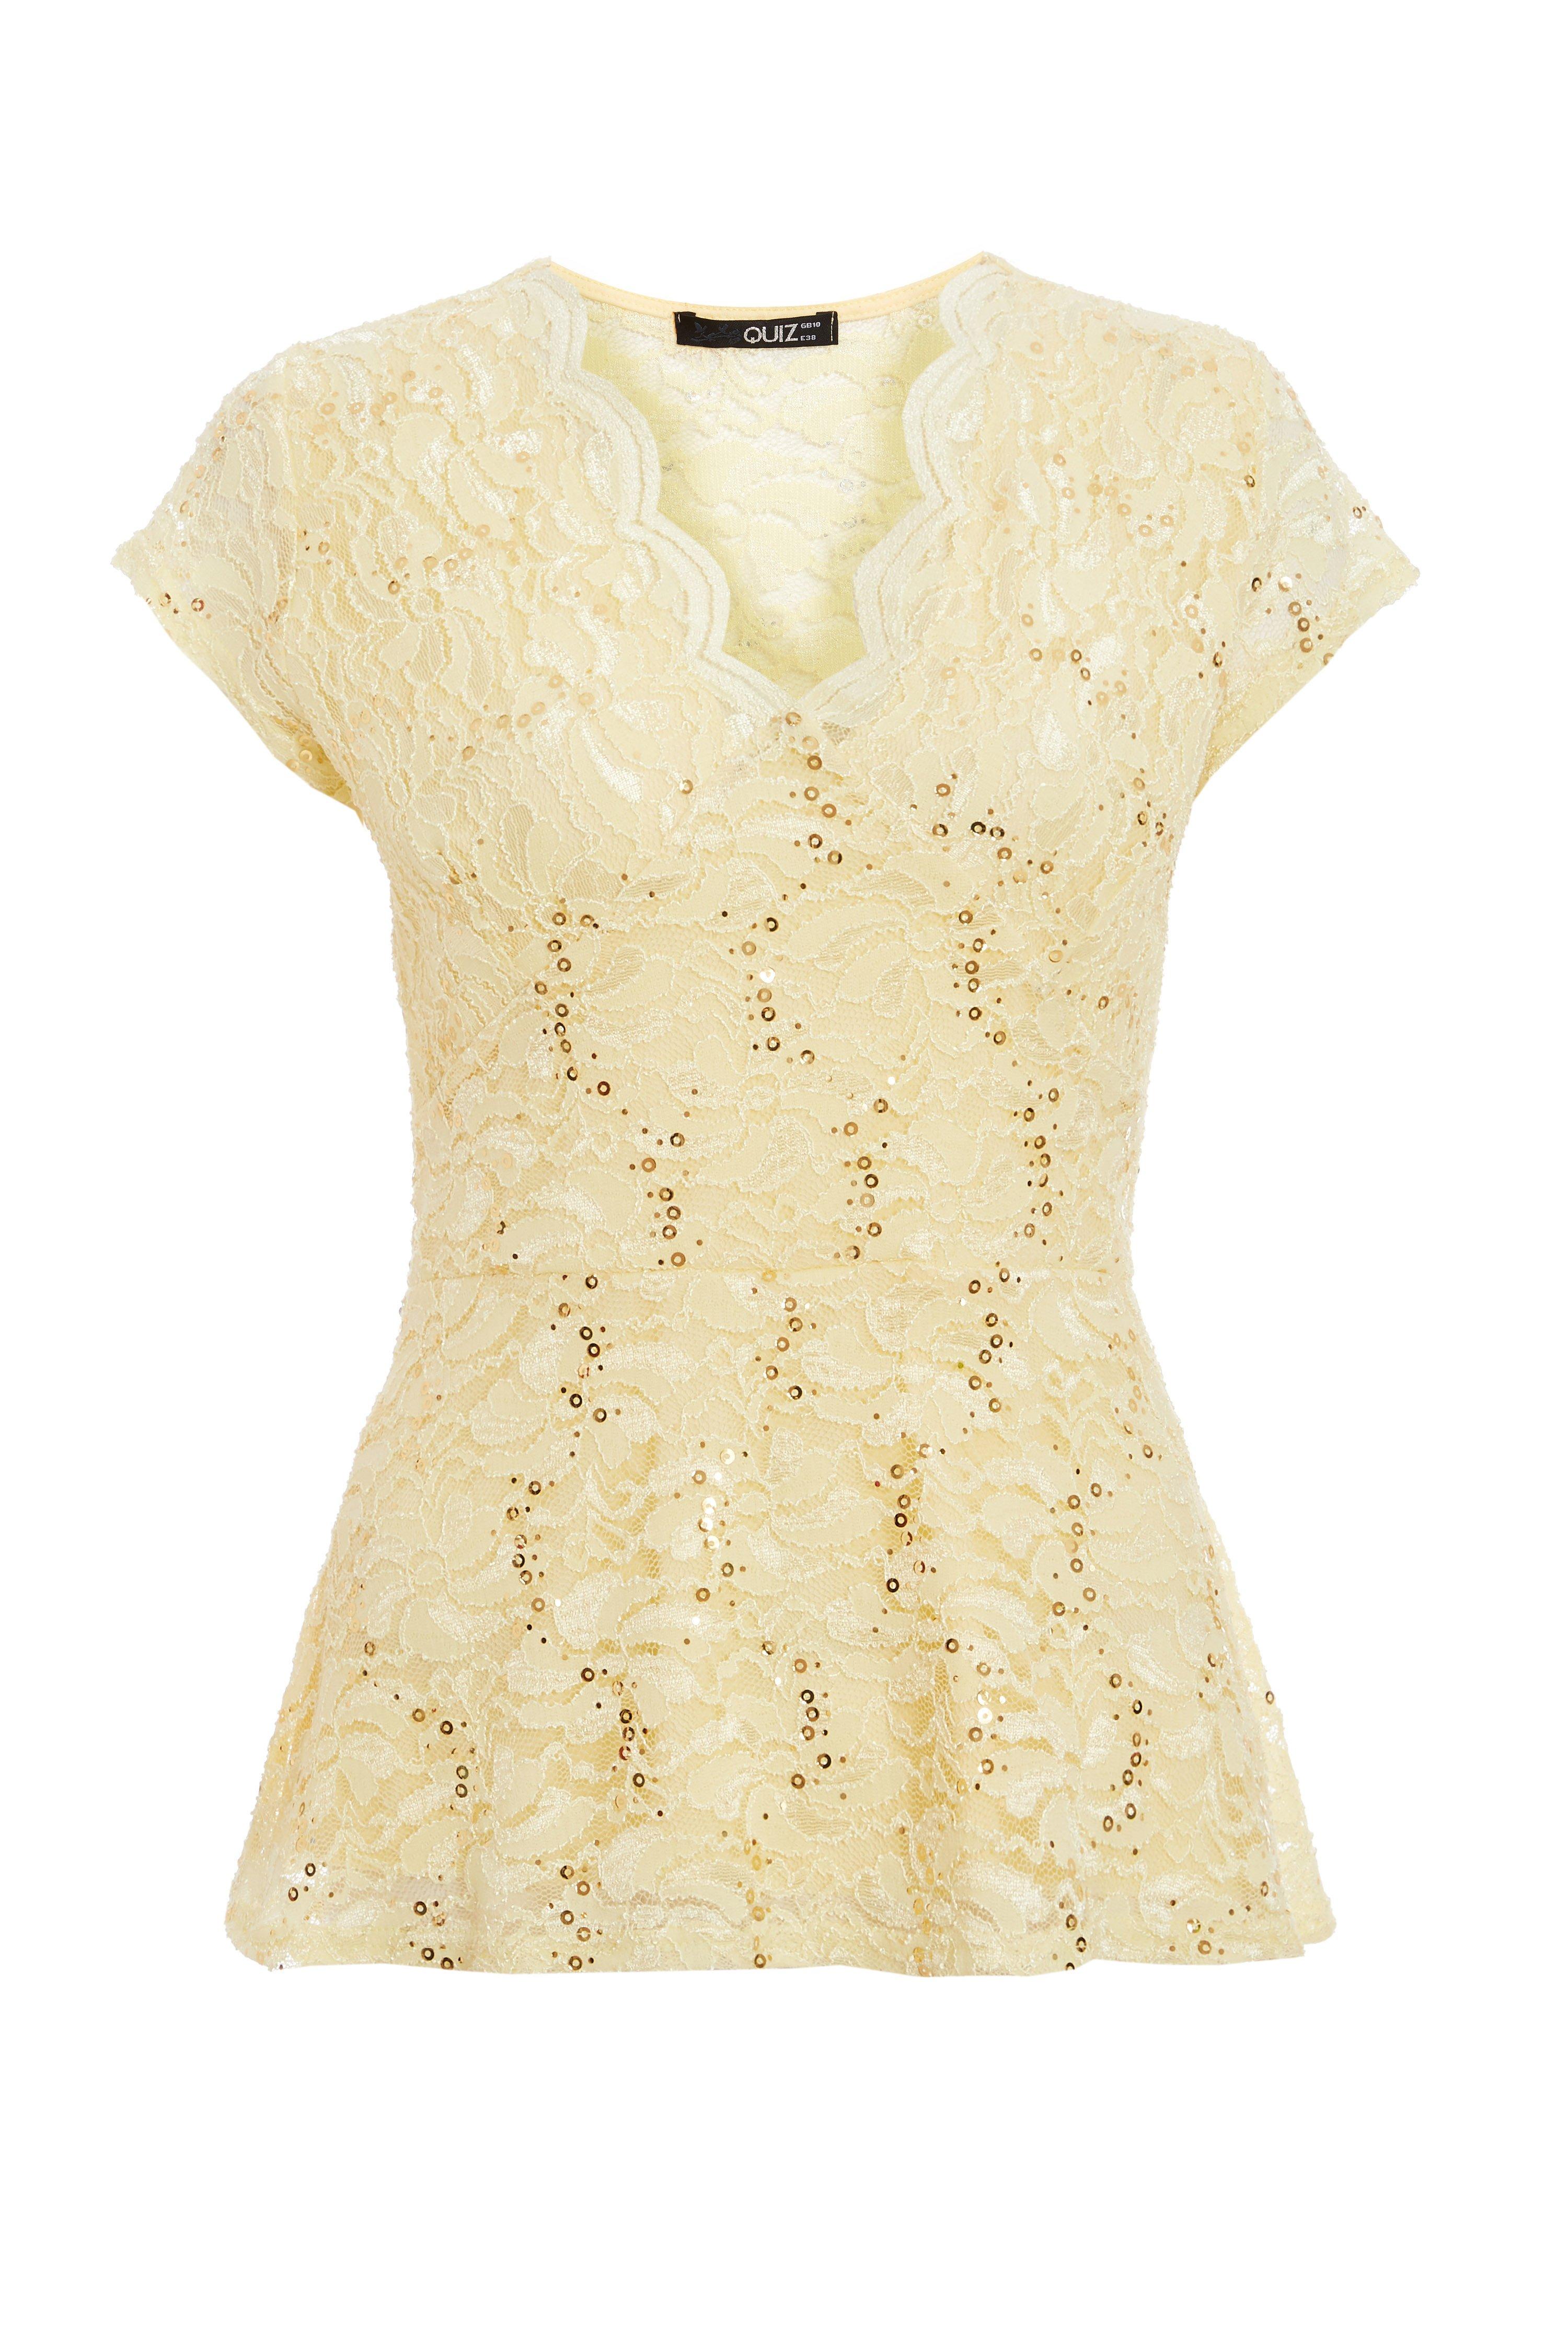 Lemon Yellow Sequin Lace Scallop Peplum Top - Quiz Clothing